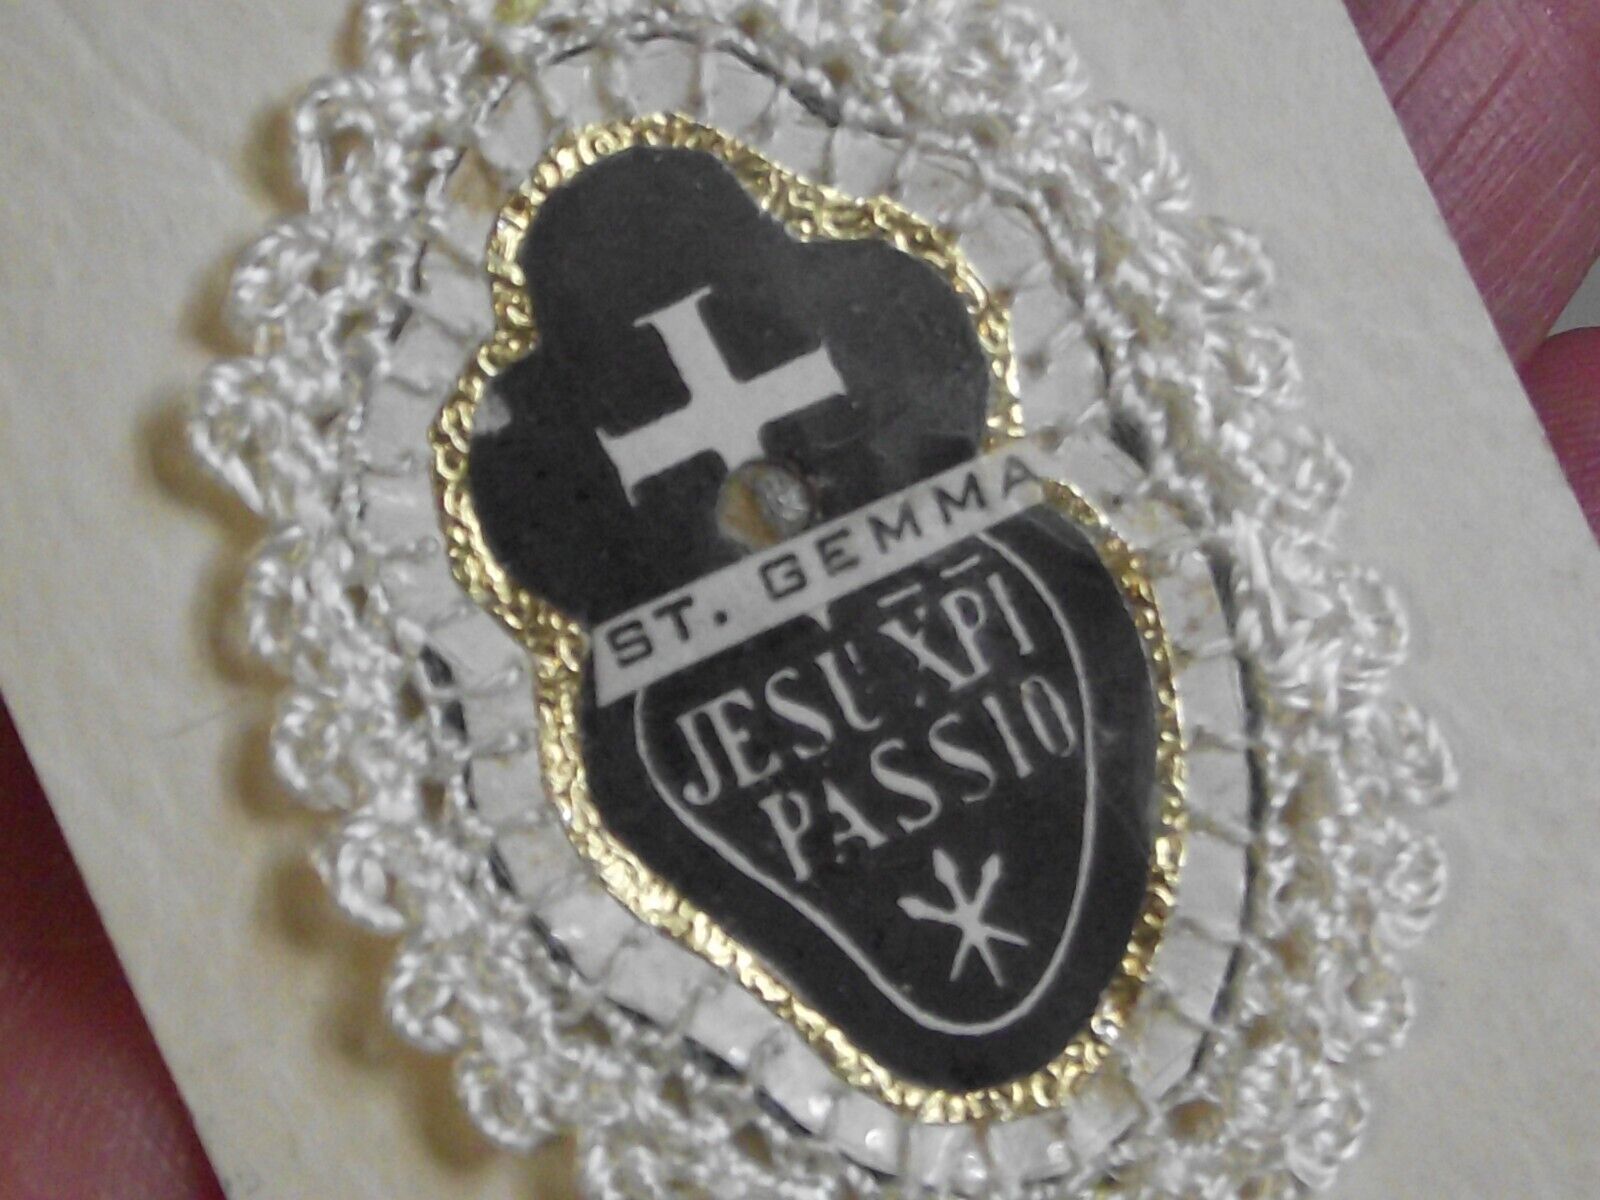 Vintage New Mystic St Saint Gemma Galgani Passionists embroidered relic badge